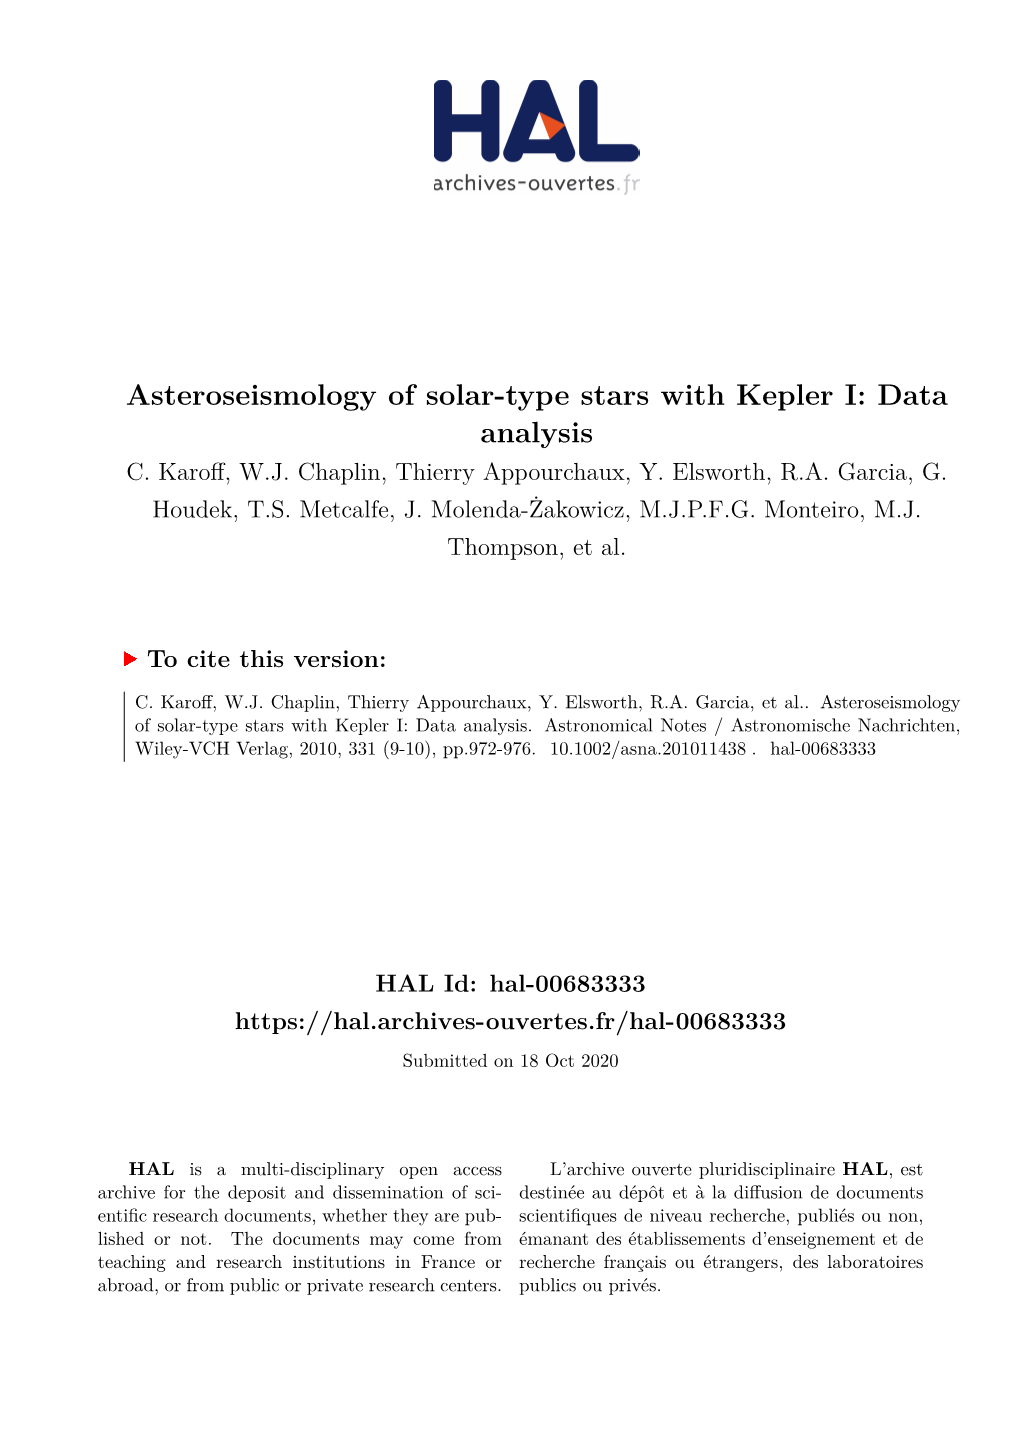 Asteroseismology of Solar-Type Stars with Kepler I: Data Analysis C